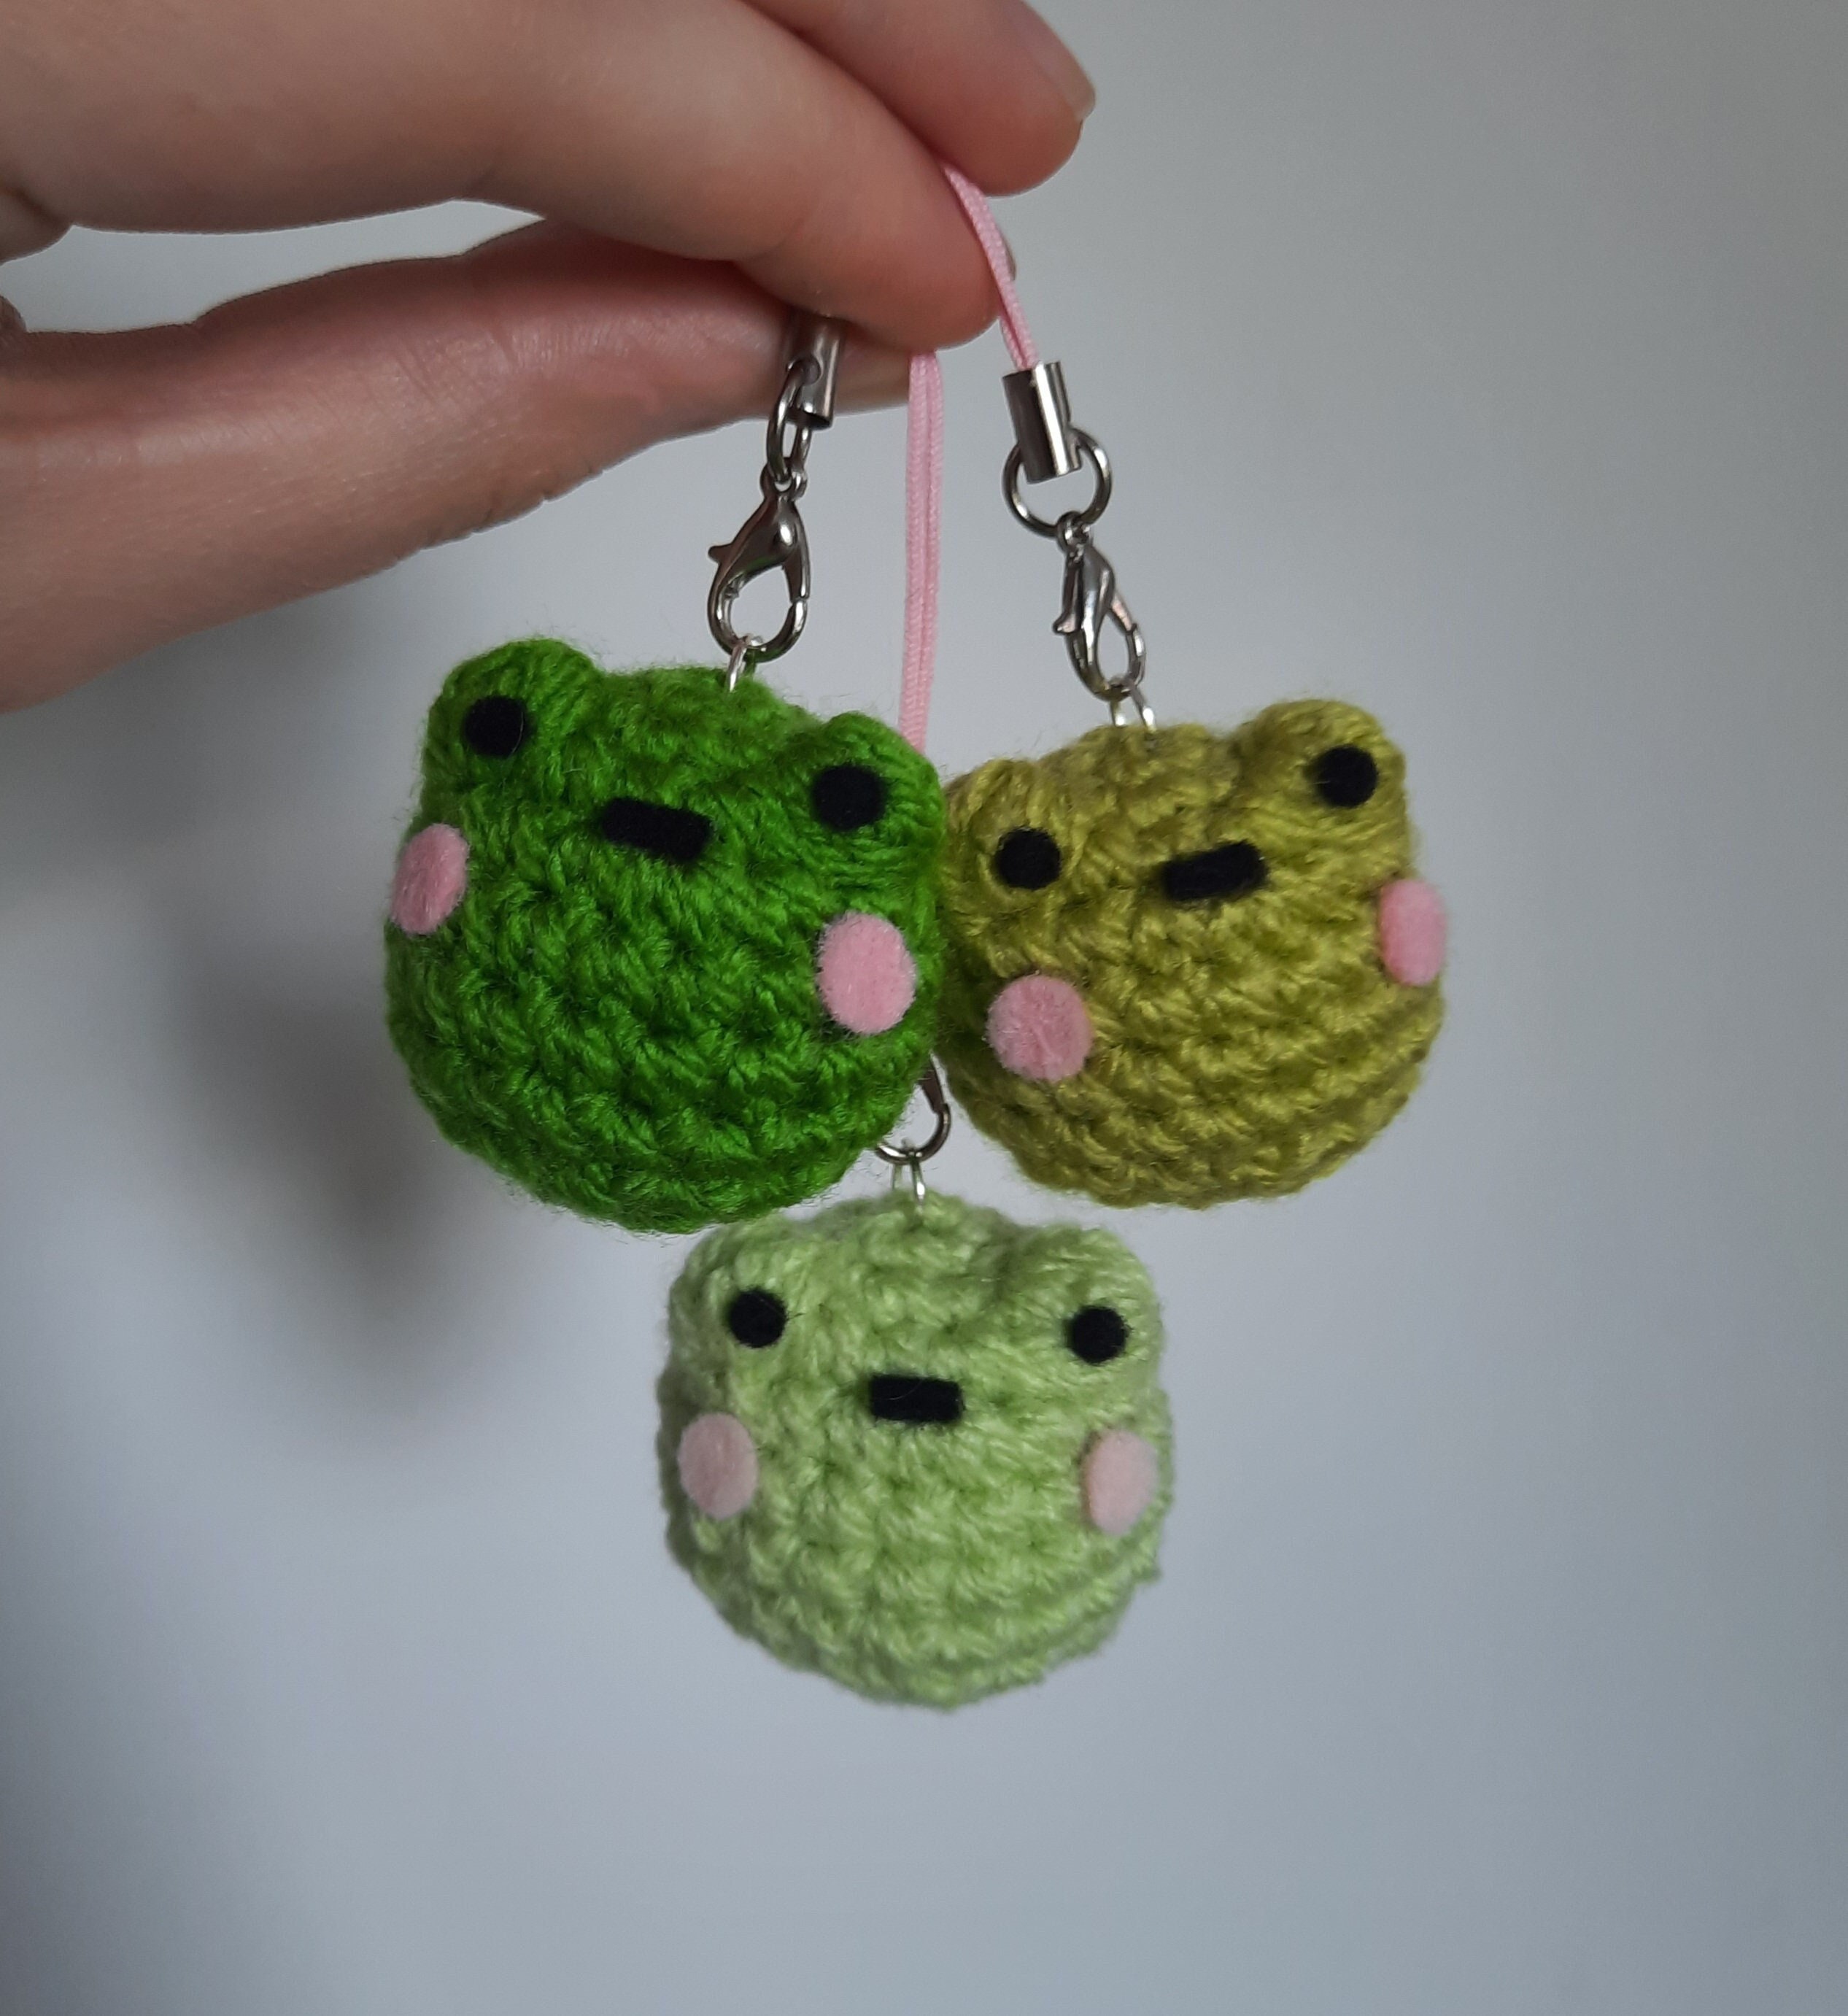 Crochet Frog and Chick Keychain, Crochet Keychain, Crochet Frog Keychain,  Crochet Chick Keychain, Amigurumi Frog Keychain, Keychain 